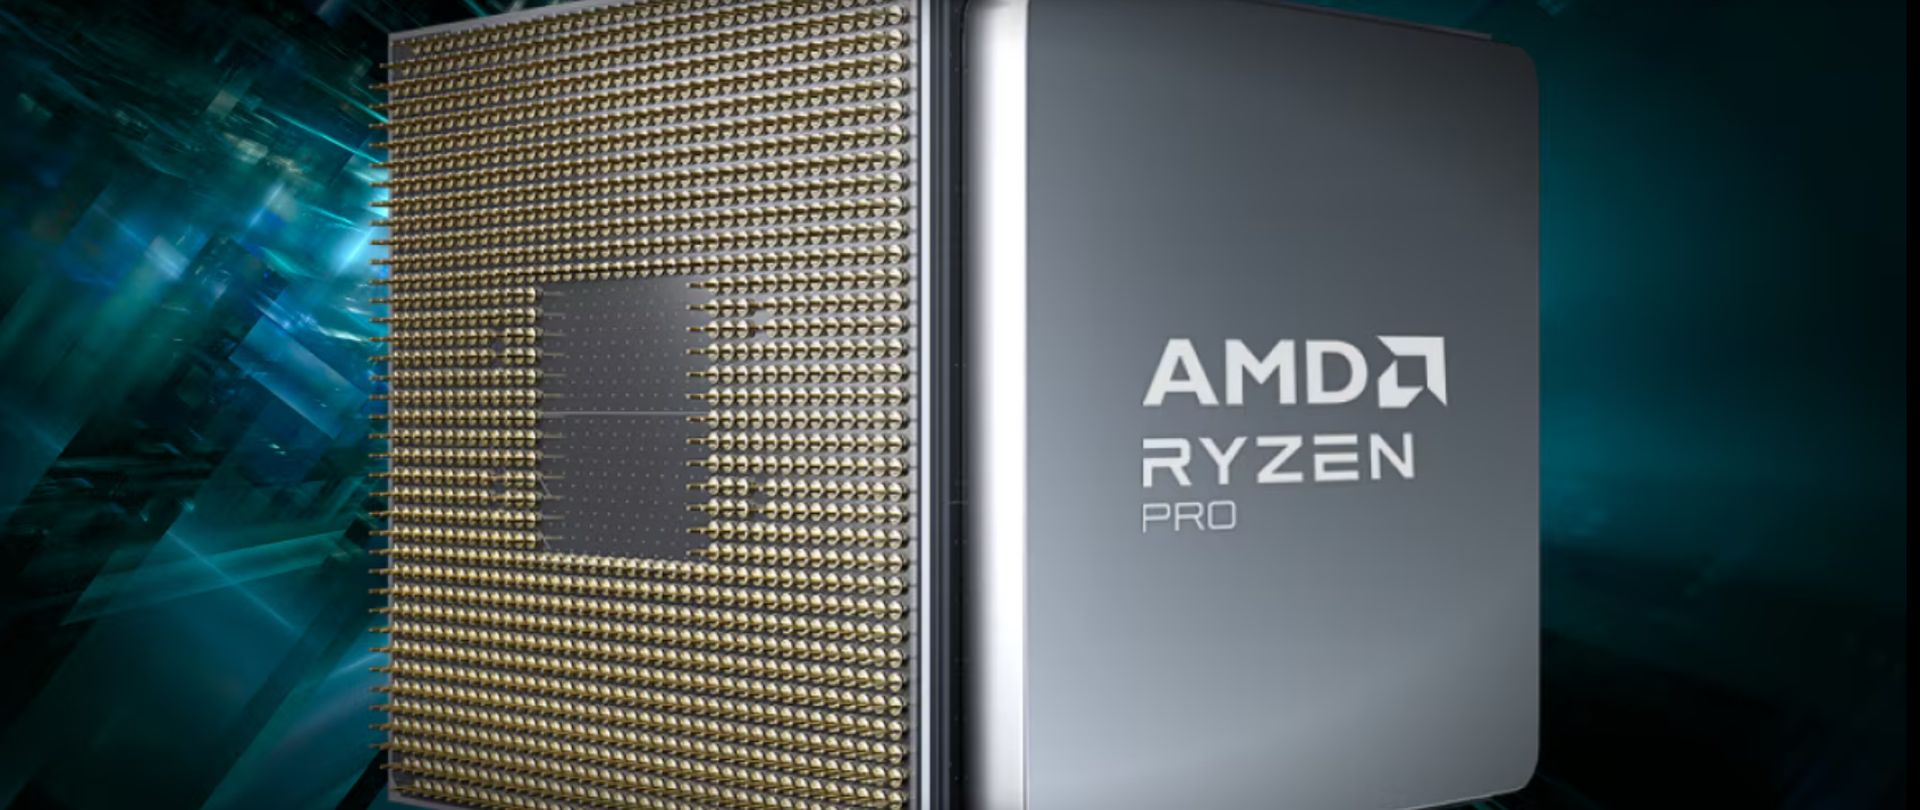 AMD、Ryzen Pro 8000シリーズプロセッサを発表